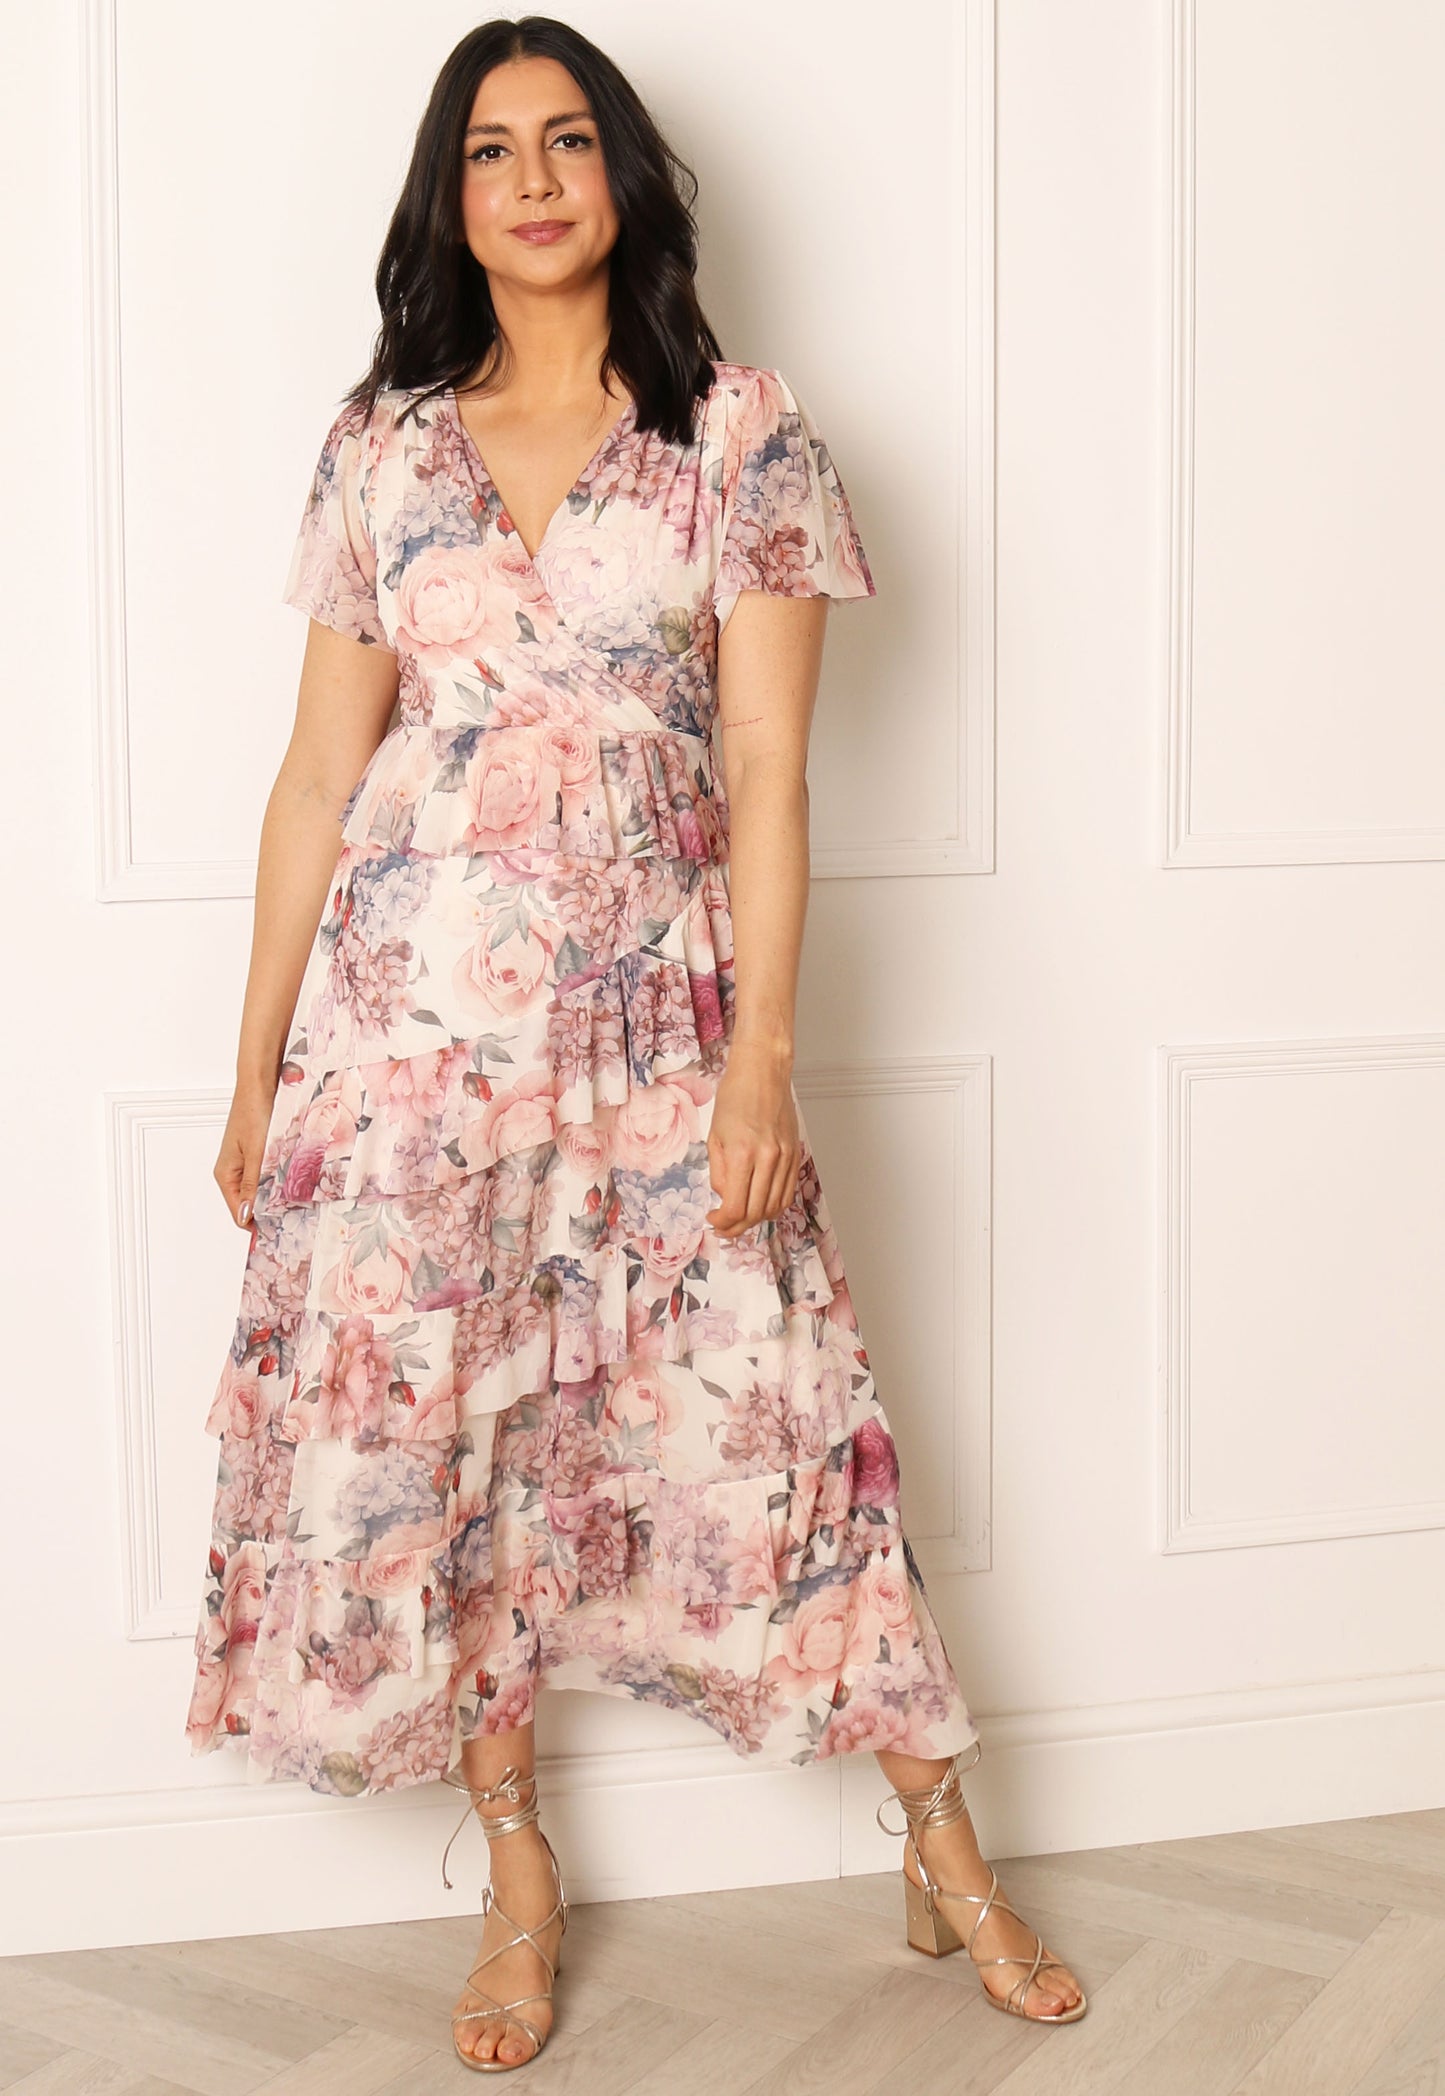 VERO MODA Blair Floral Print Wrap Top Tiered Midi Dress in Pink & Cream Tones - concretebartops